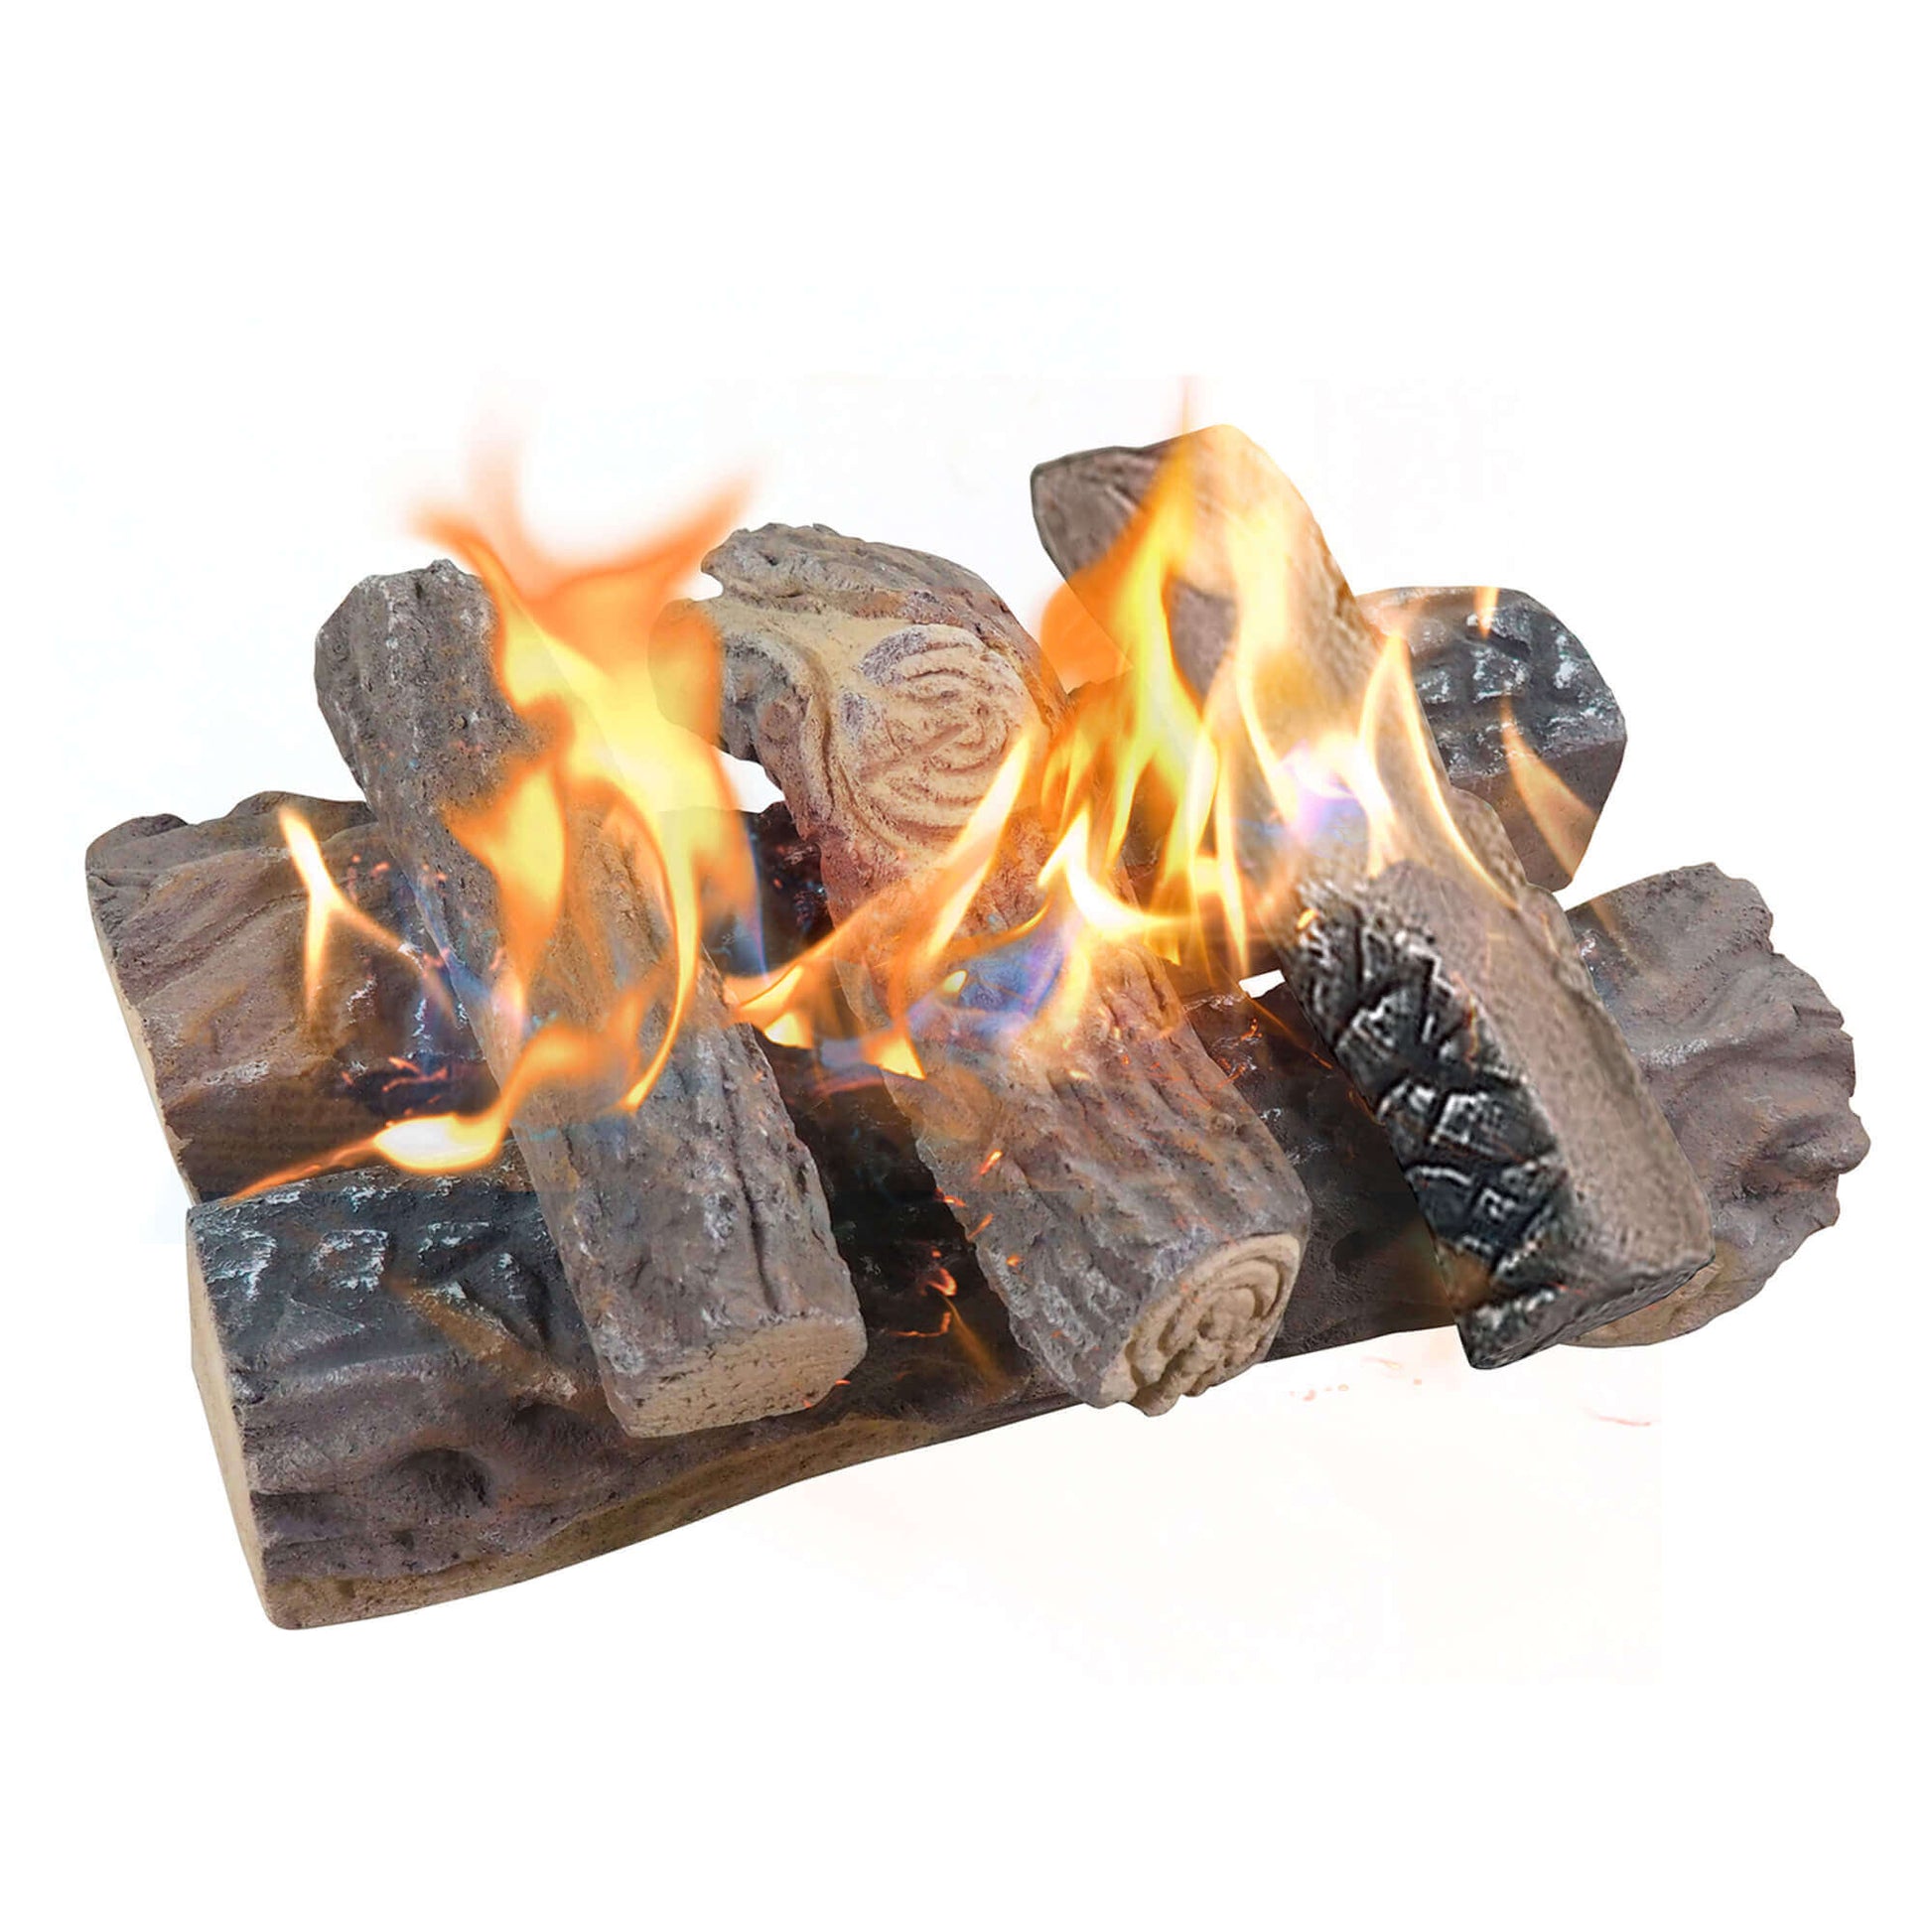 Gas Fireplace Logs / Large Ceramic Logs / Artificial Firewood Logs( Set of 5)